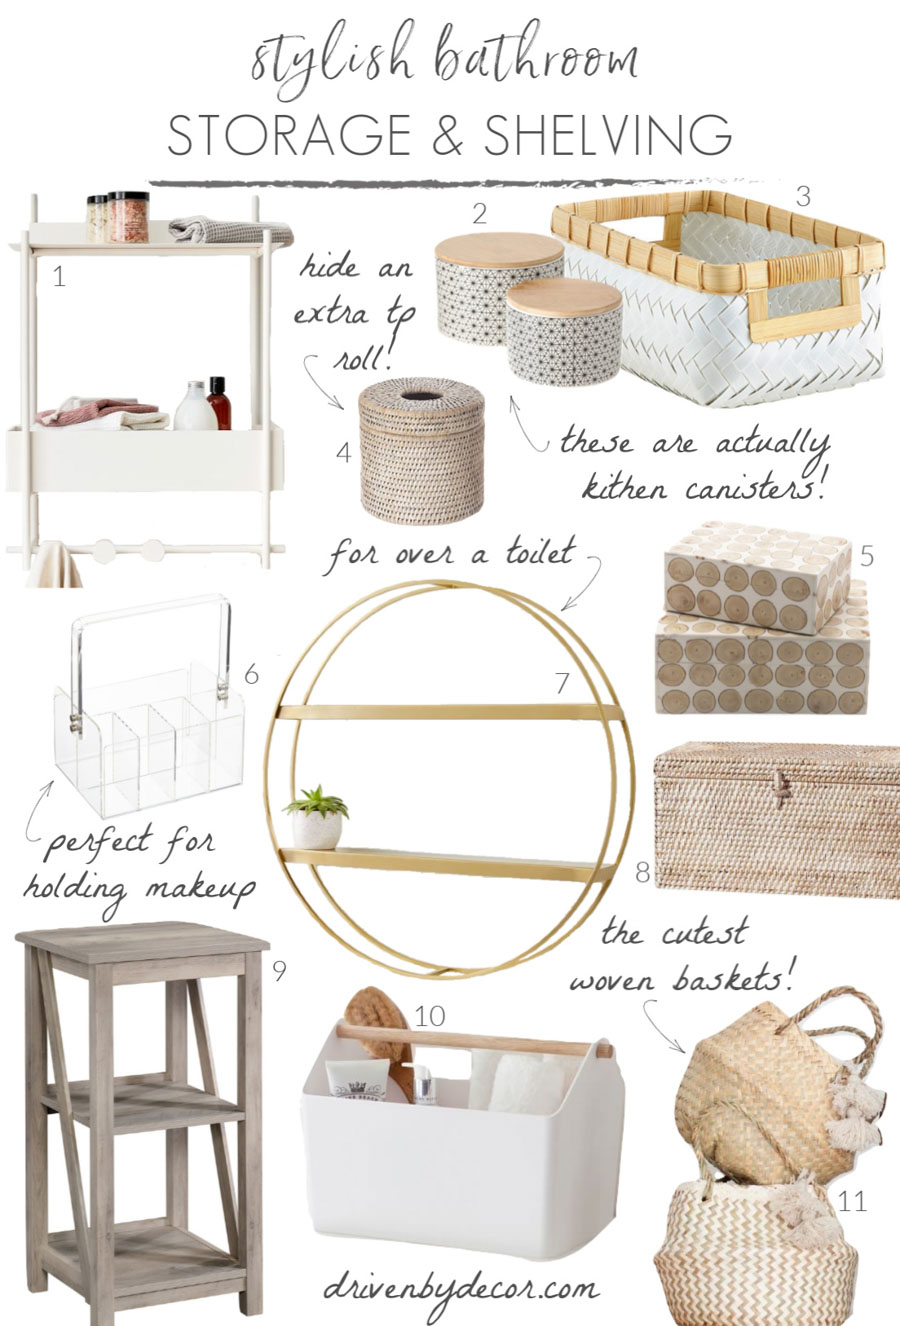 Stylish bathroom decor ideas for storage - shelves, baskets, and bins!